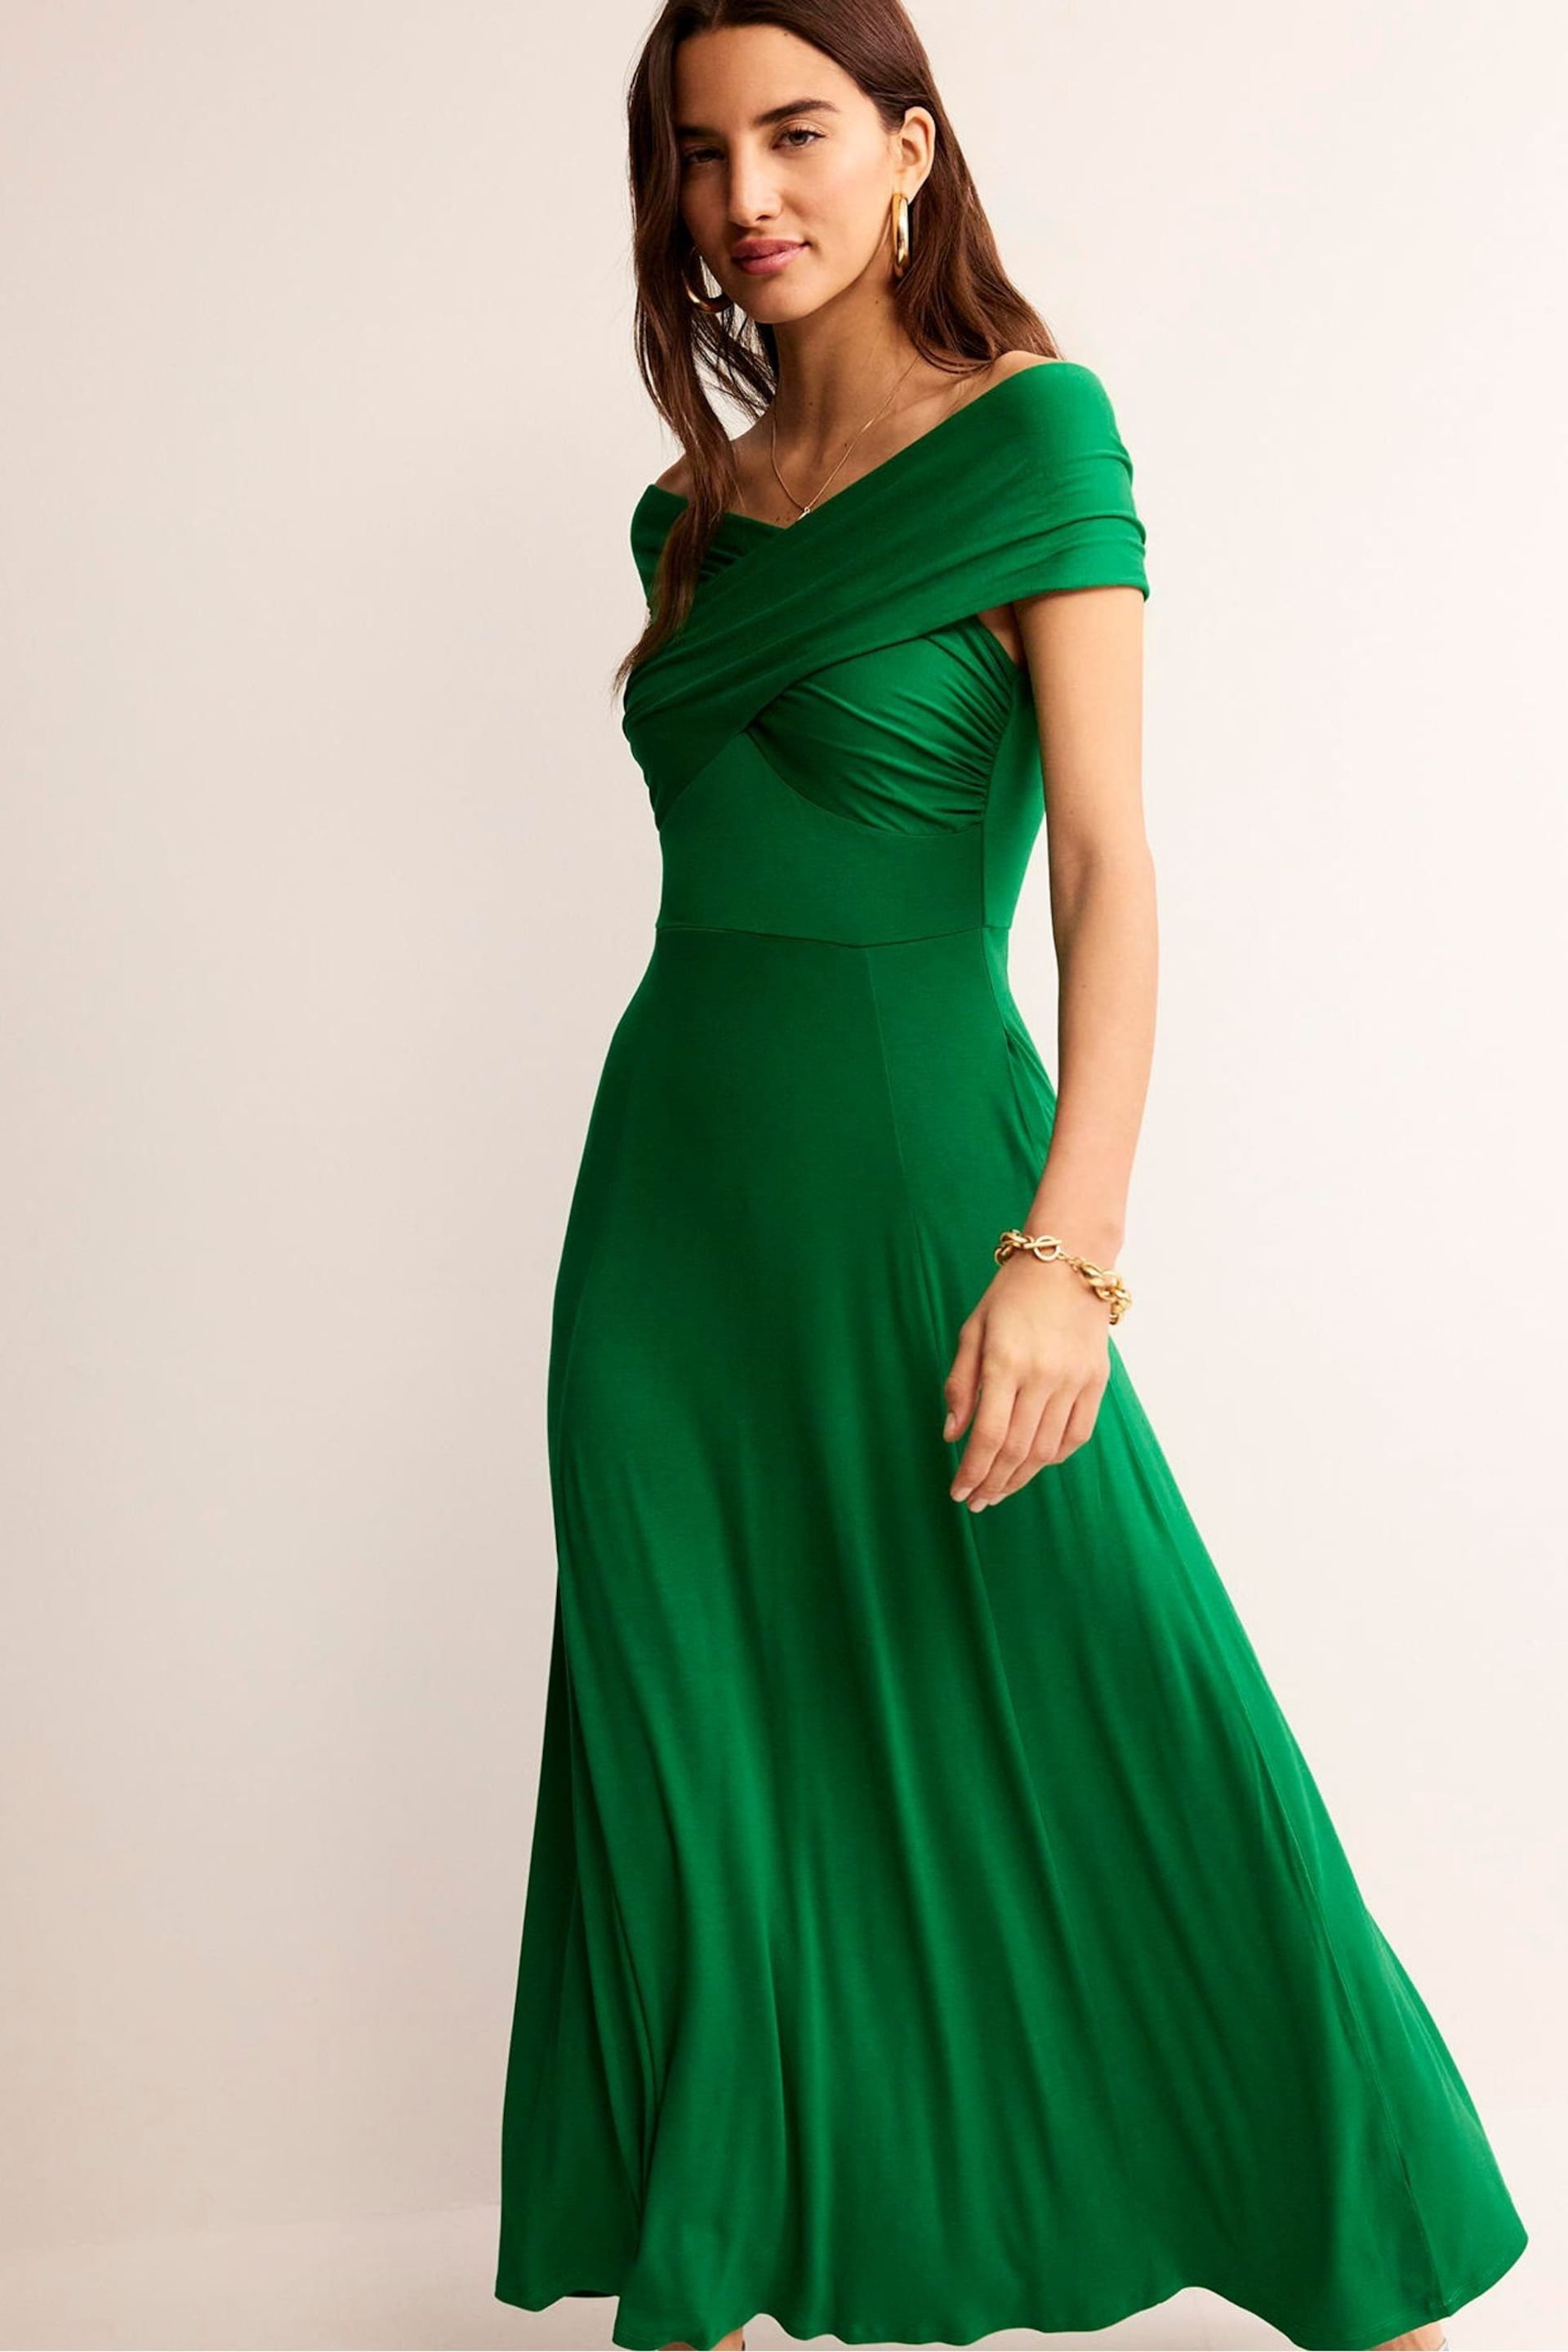 Boden Green Petite Bardot Jersey Maxi Dress - Image 4 of 5